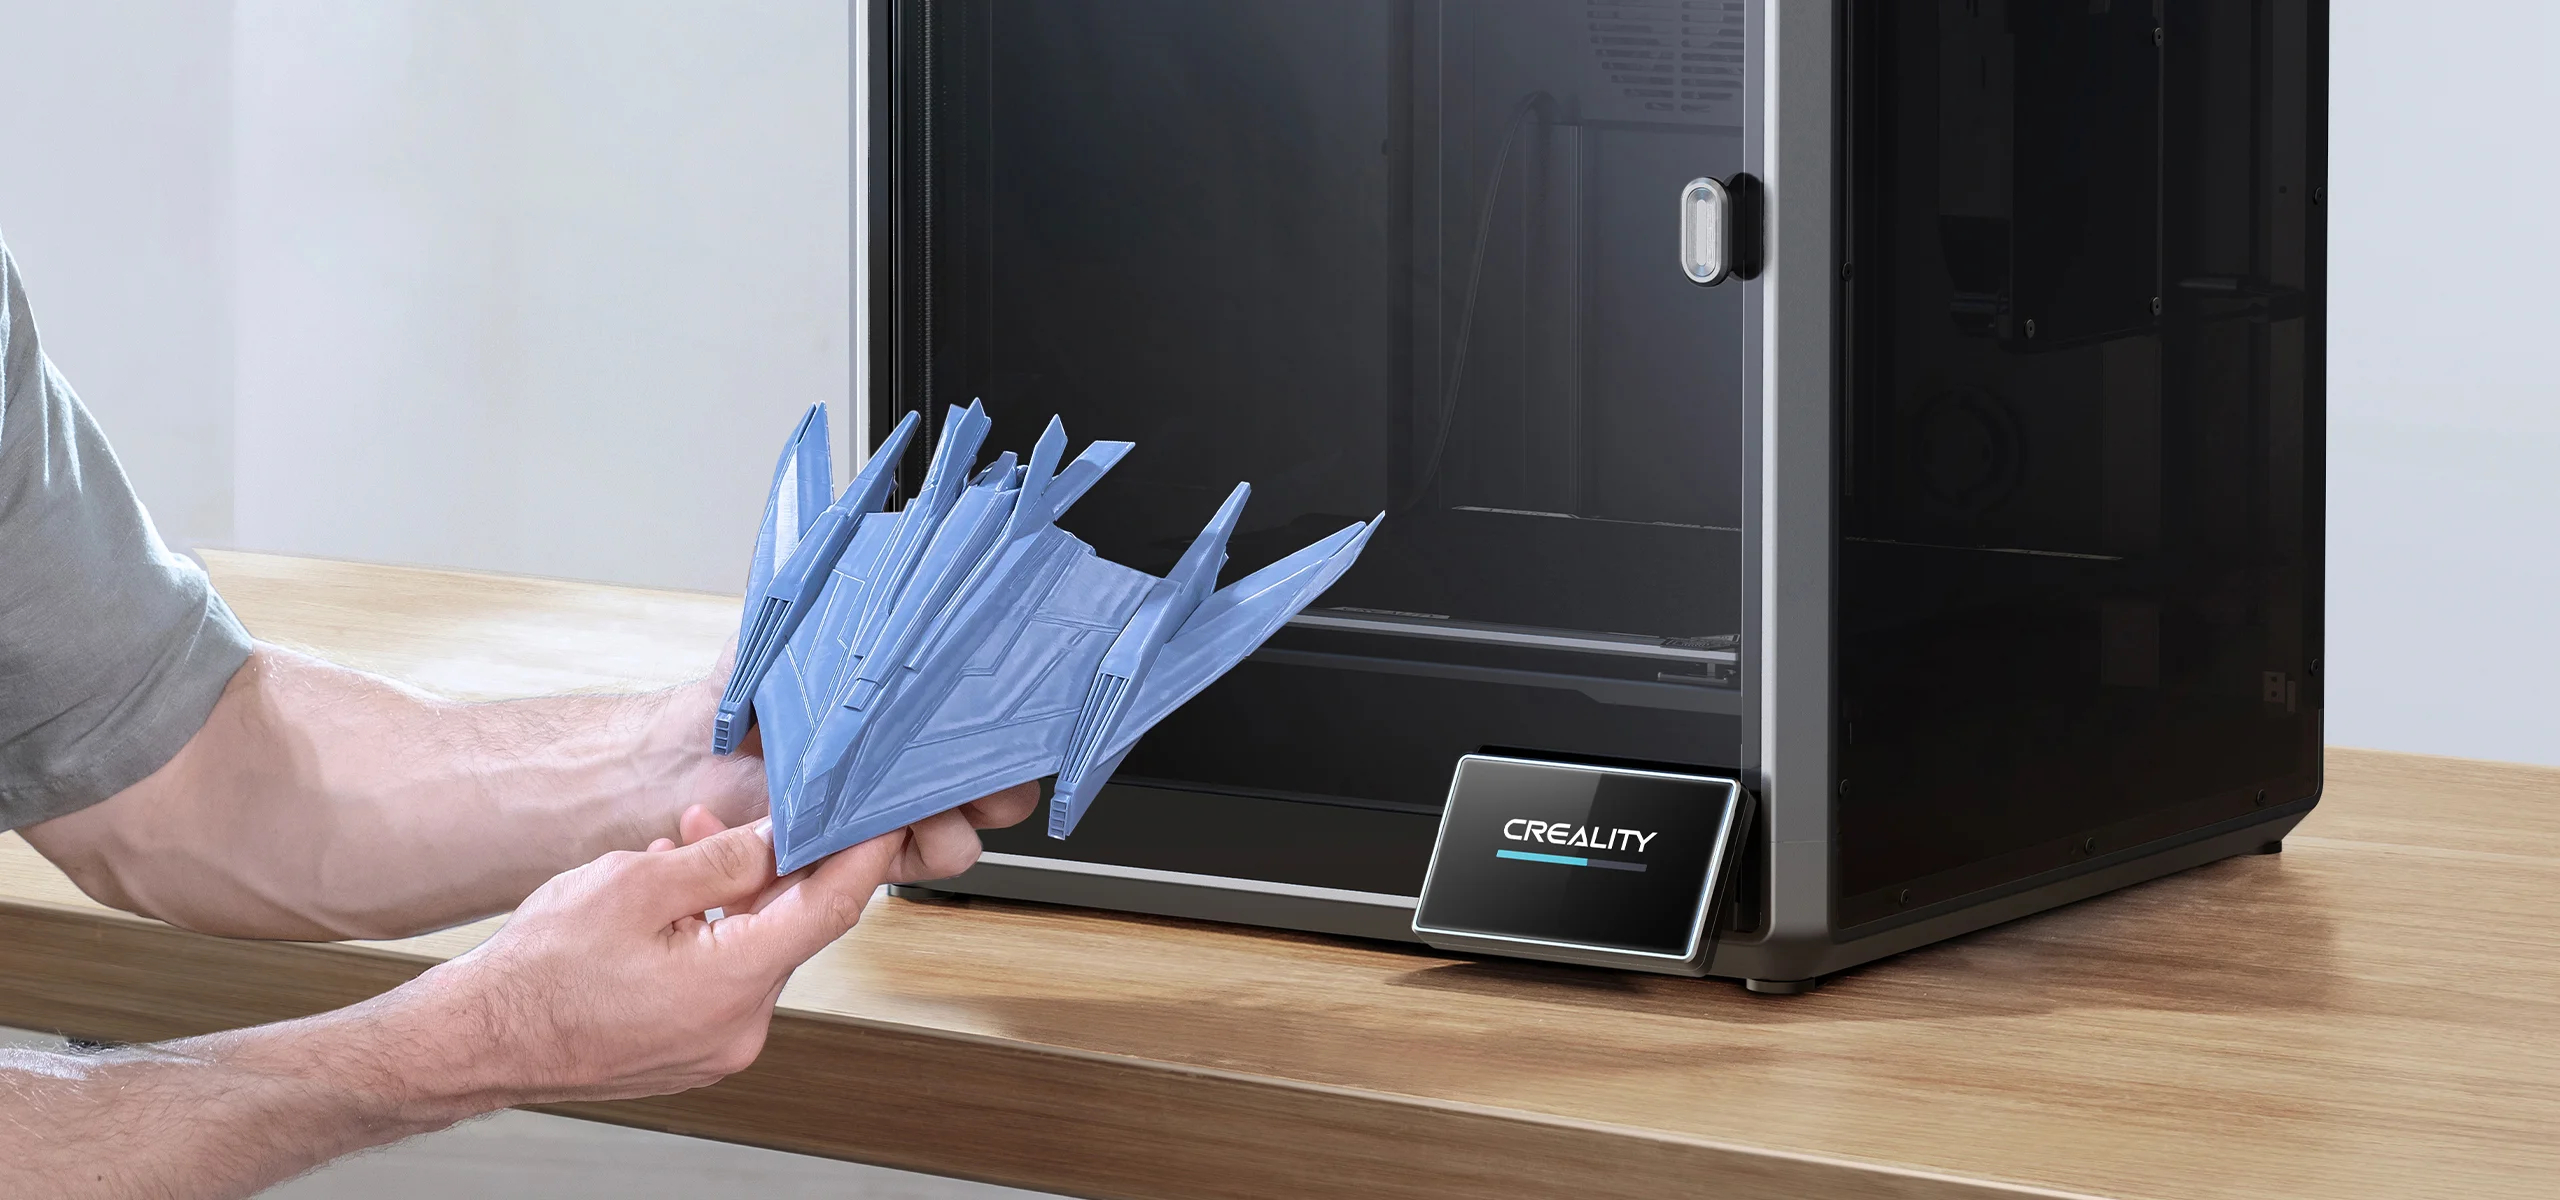 Creality K1 Max 3D-printer